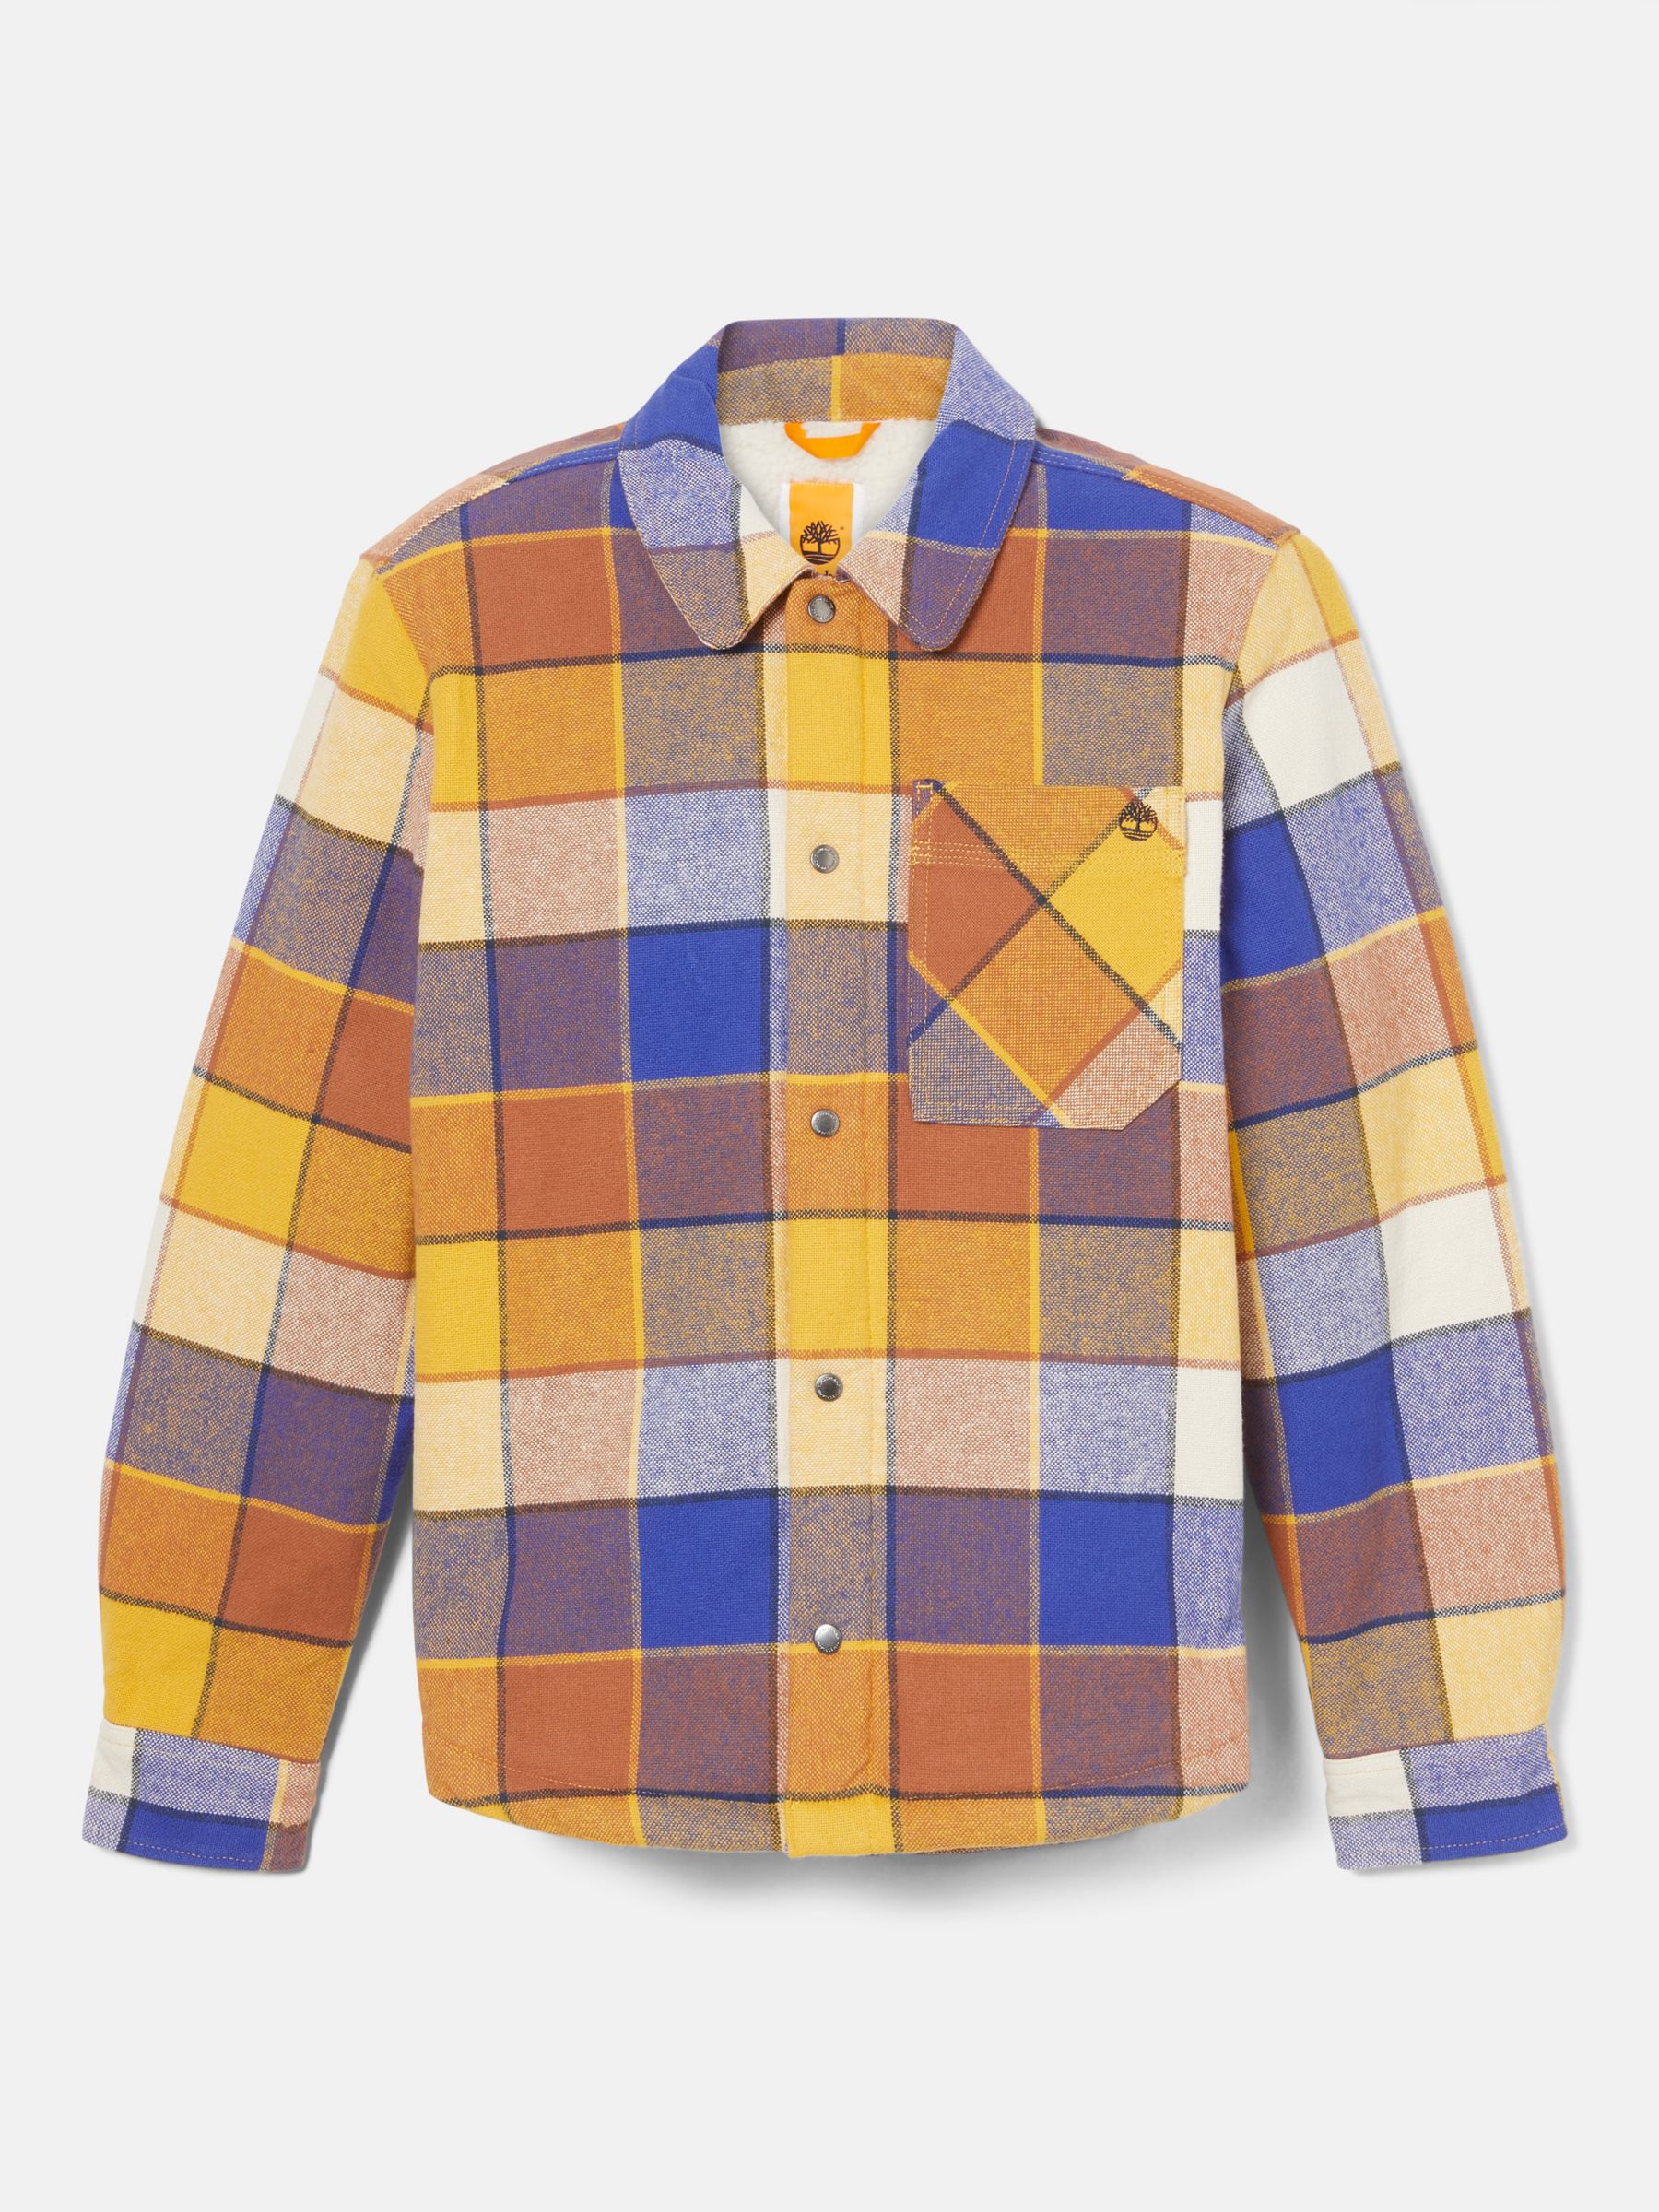 Buy Timberland Sherpa Lined Overshirt, Yellow/Multi Online at johnlewis.com